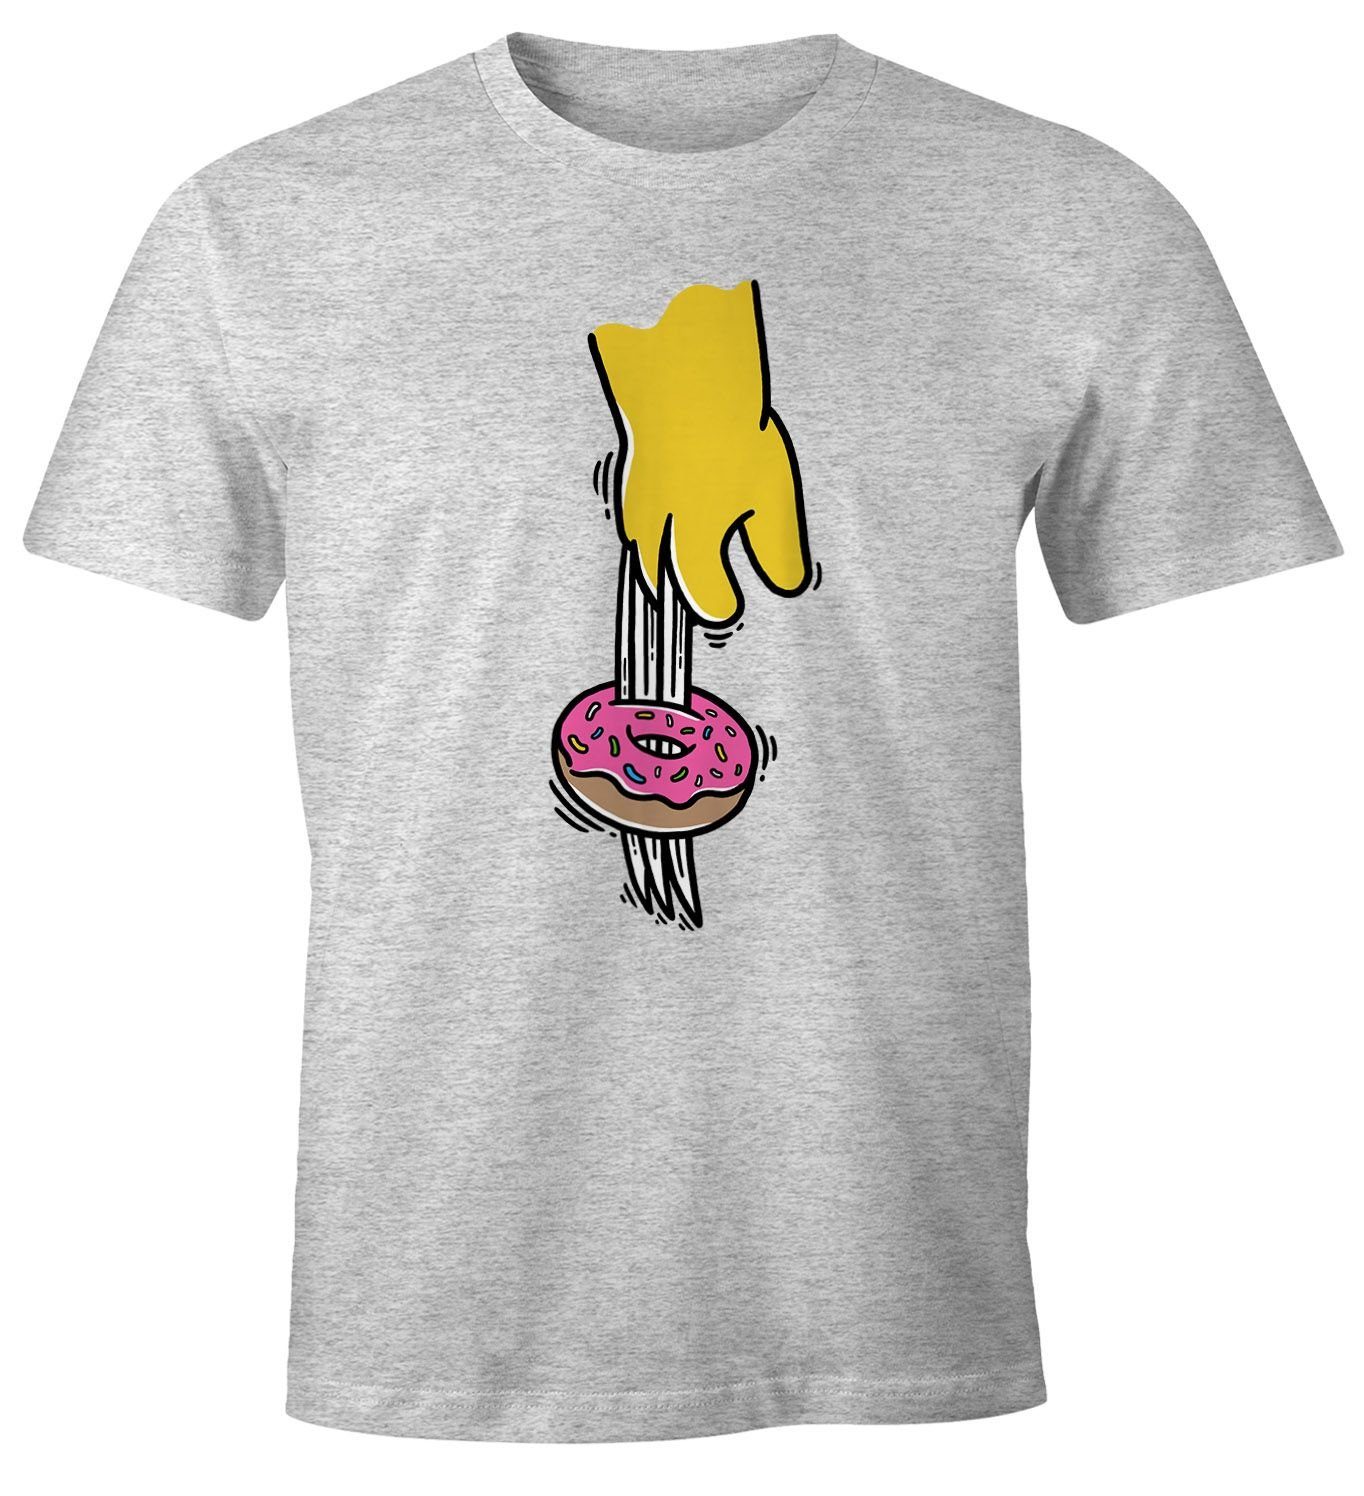 grau Doughnut Fun-Shirt MoonWorks Donut Print-Shirt T-Shirt mit Print Herren Moonworks®